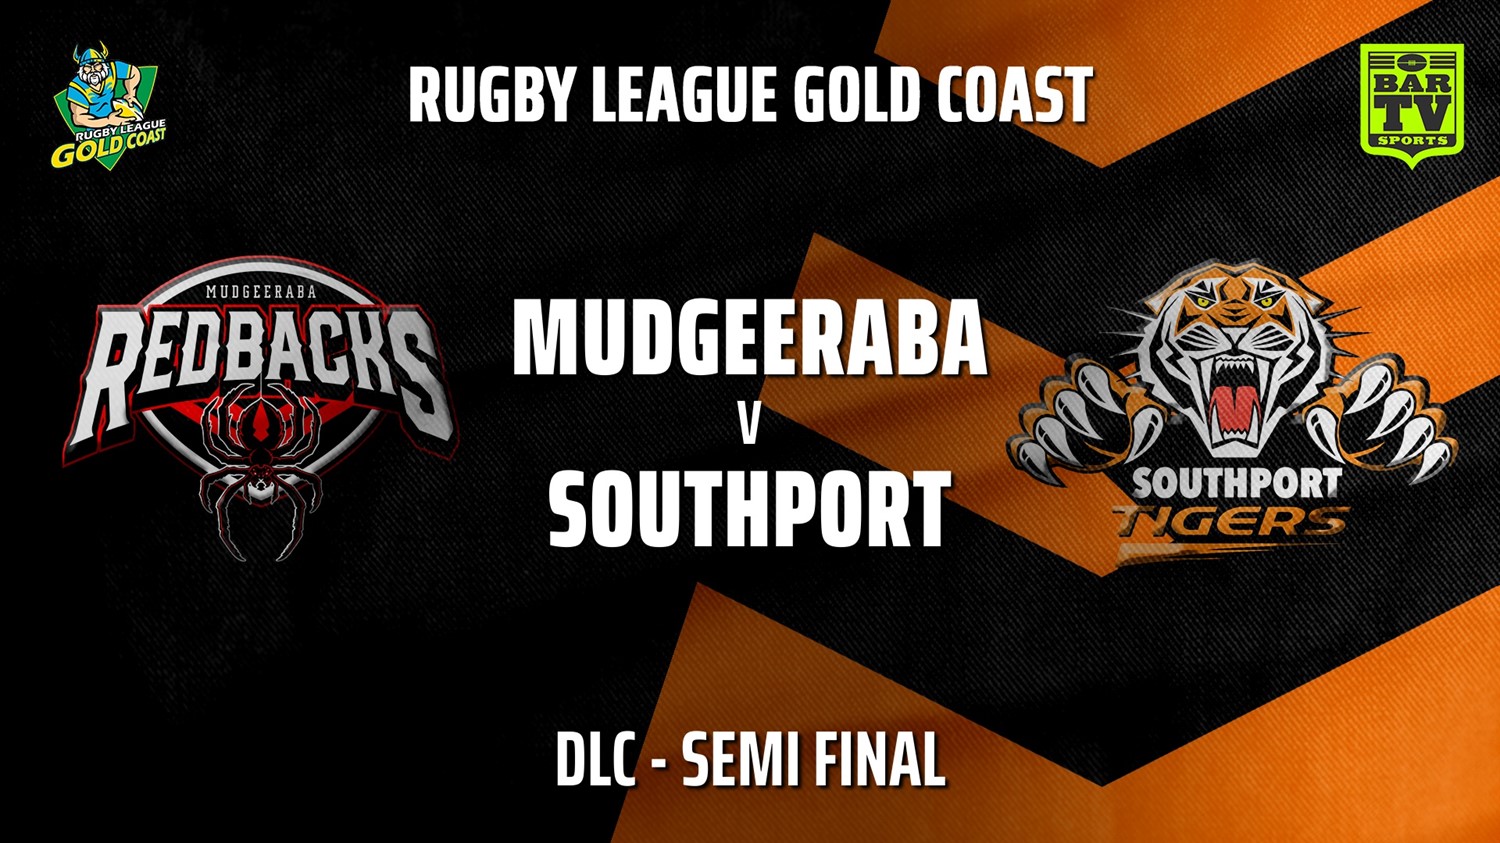 211002-Gold Coast Semi Final - DLC - Mudgeeraba Redbacks v Southport Tigers Slate Image